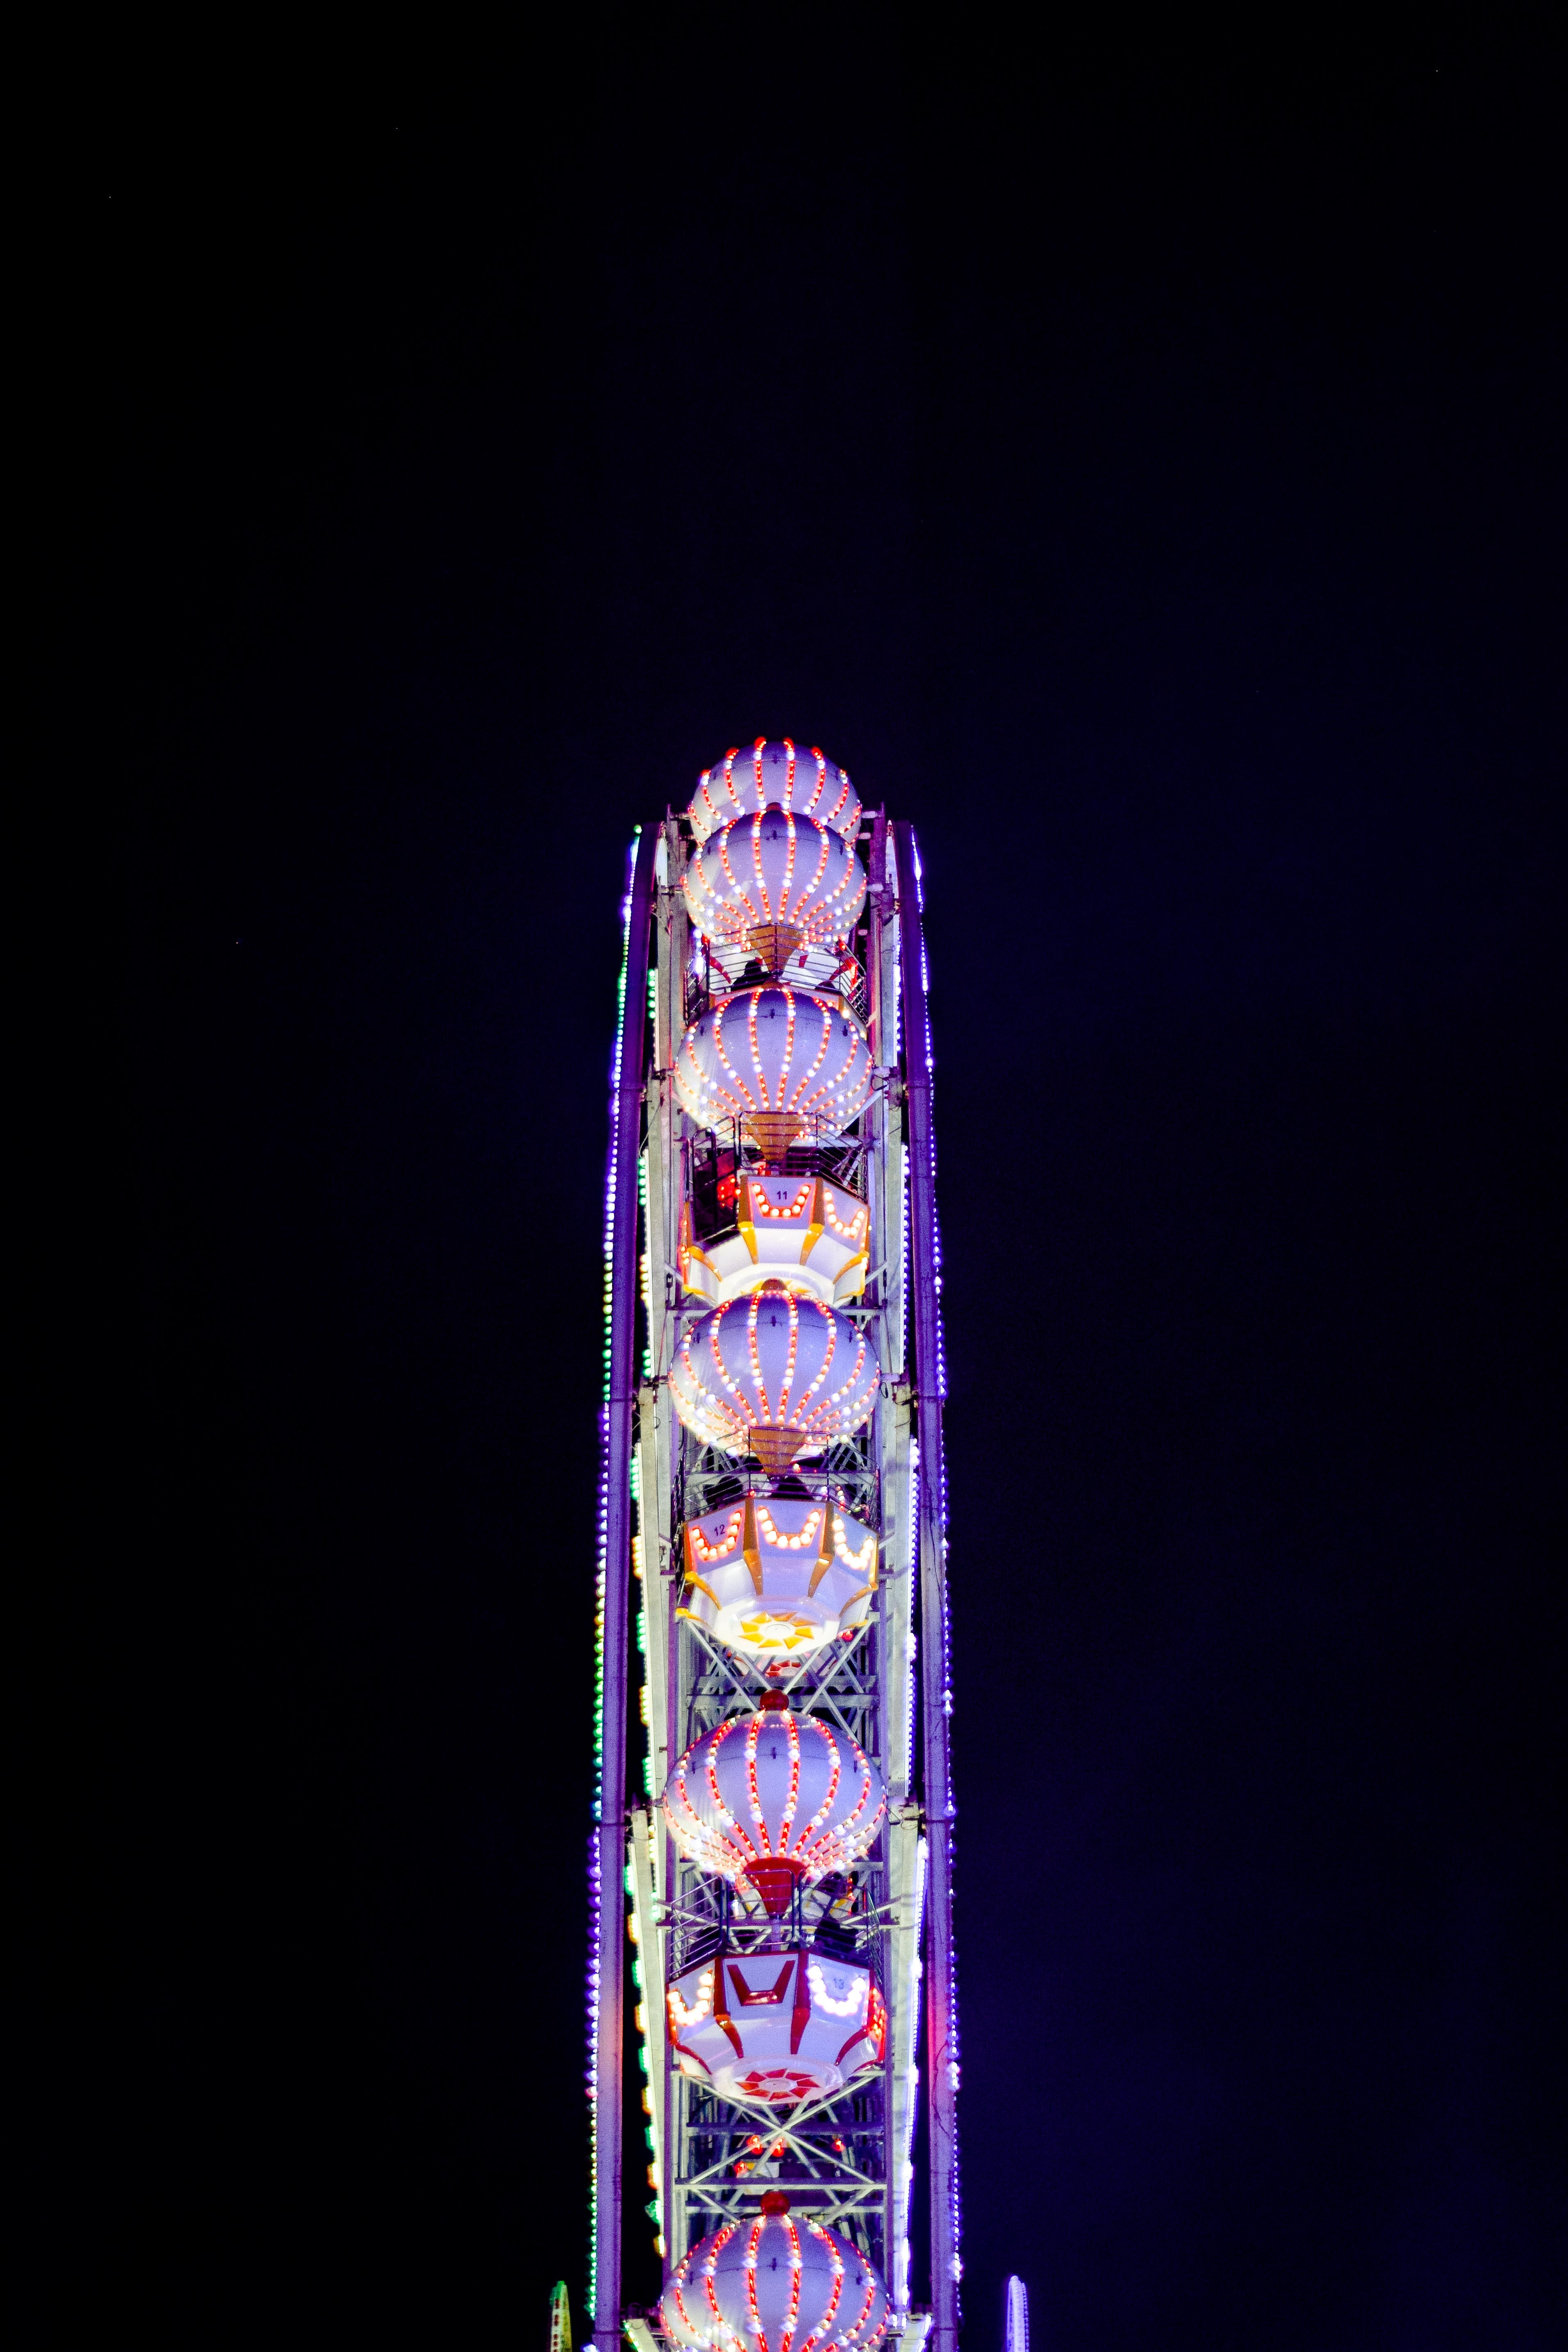 Illuminated ferris wheel at night photo